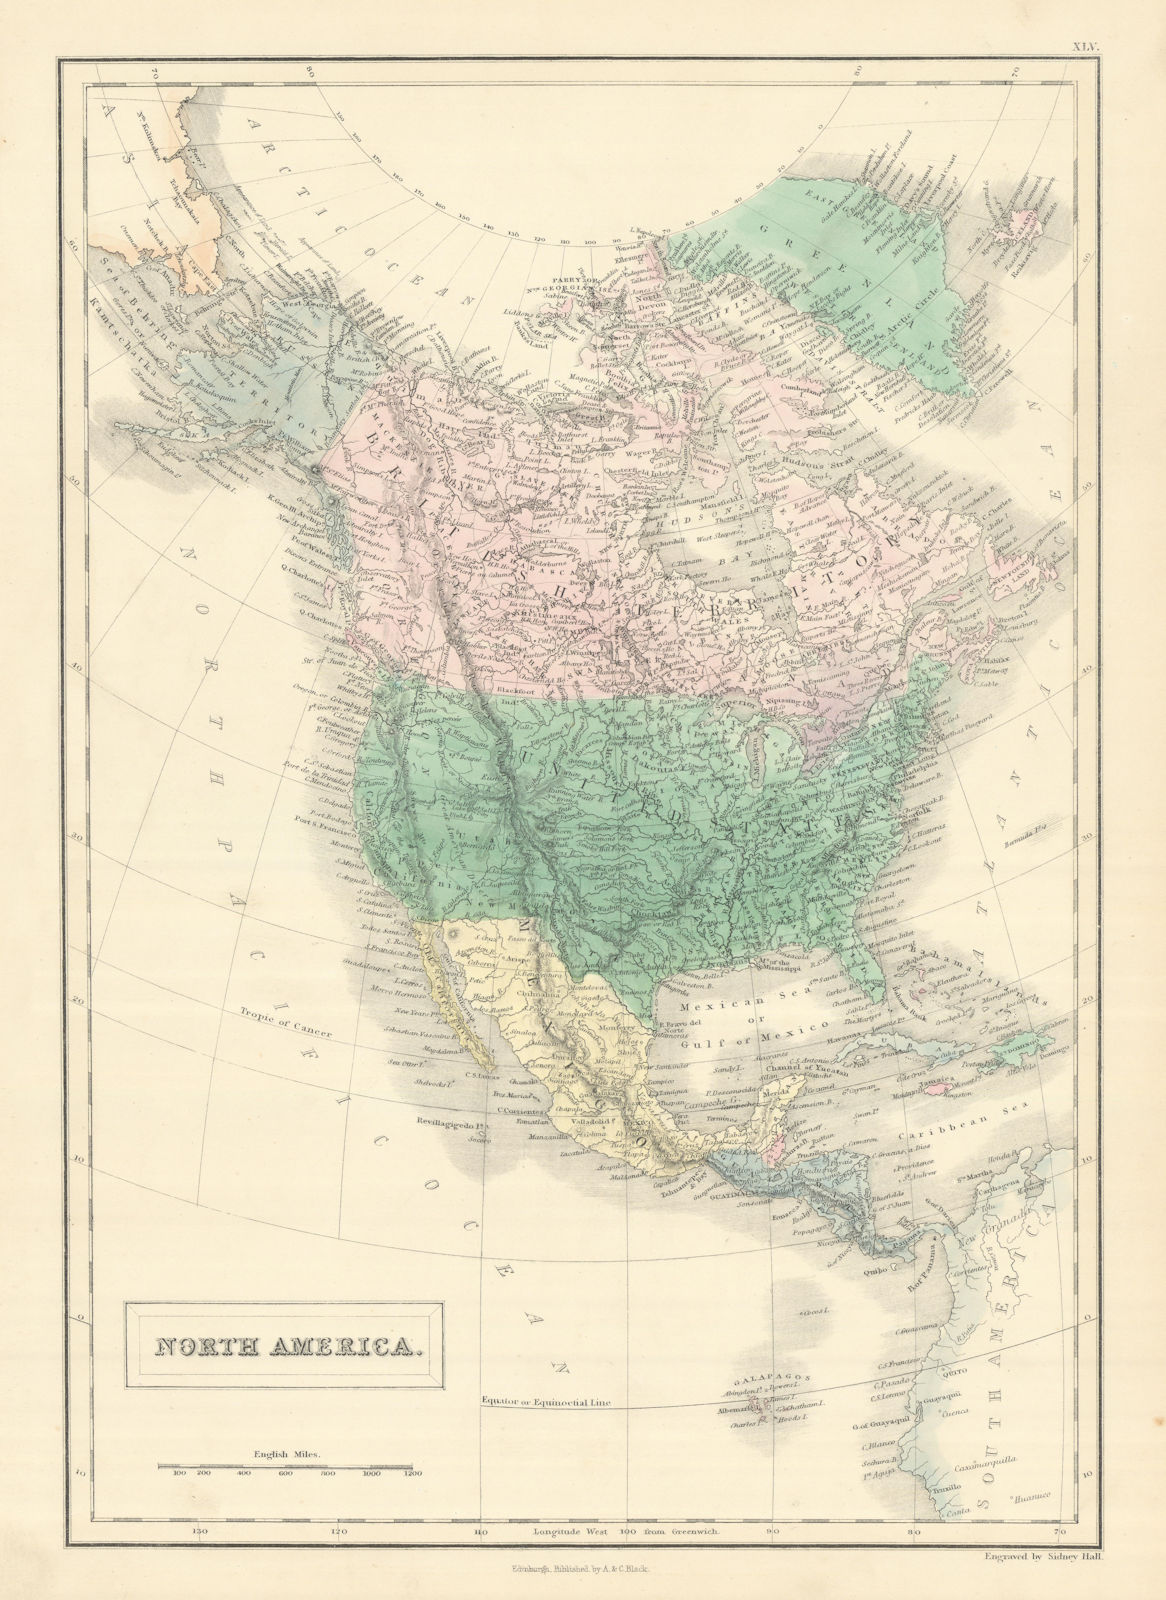 North America. Russian Alaska. US 31 states. SIDNEY HALL 1854 old antique map